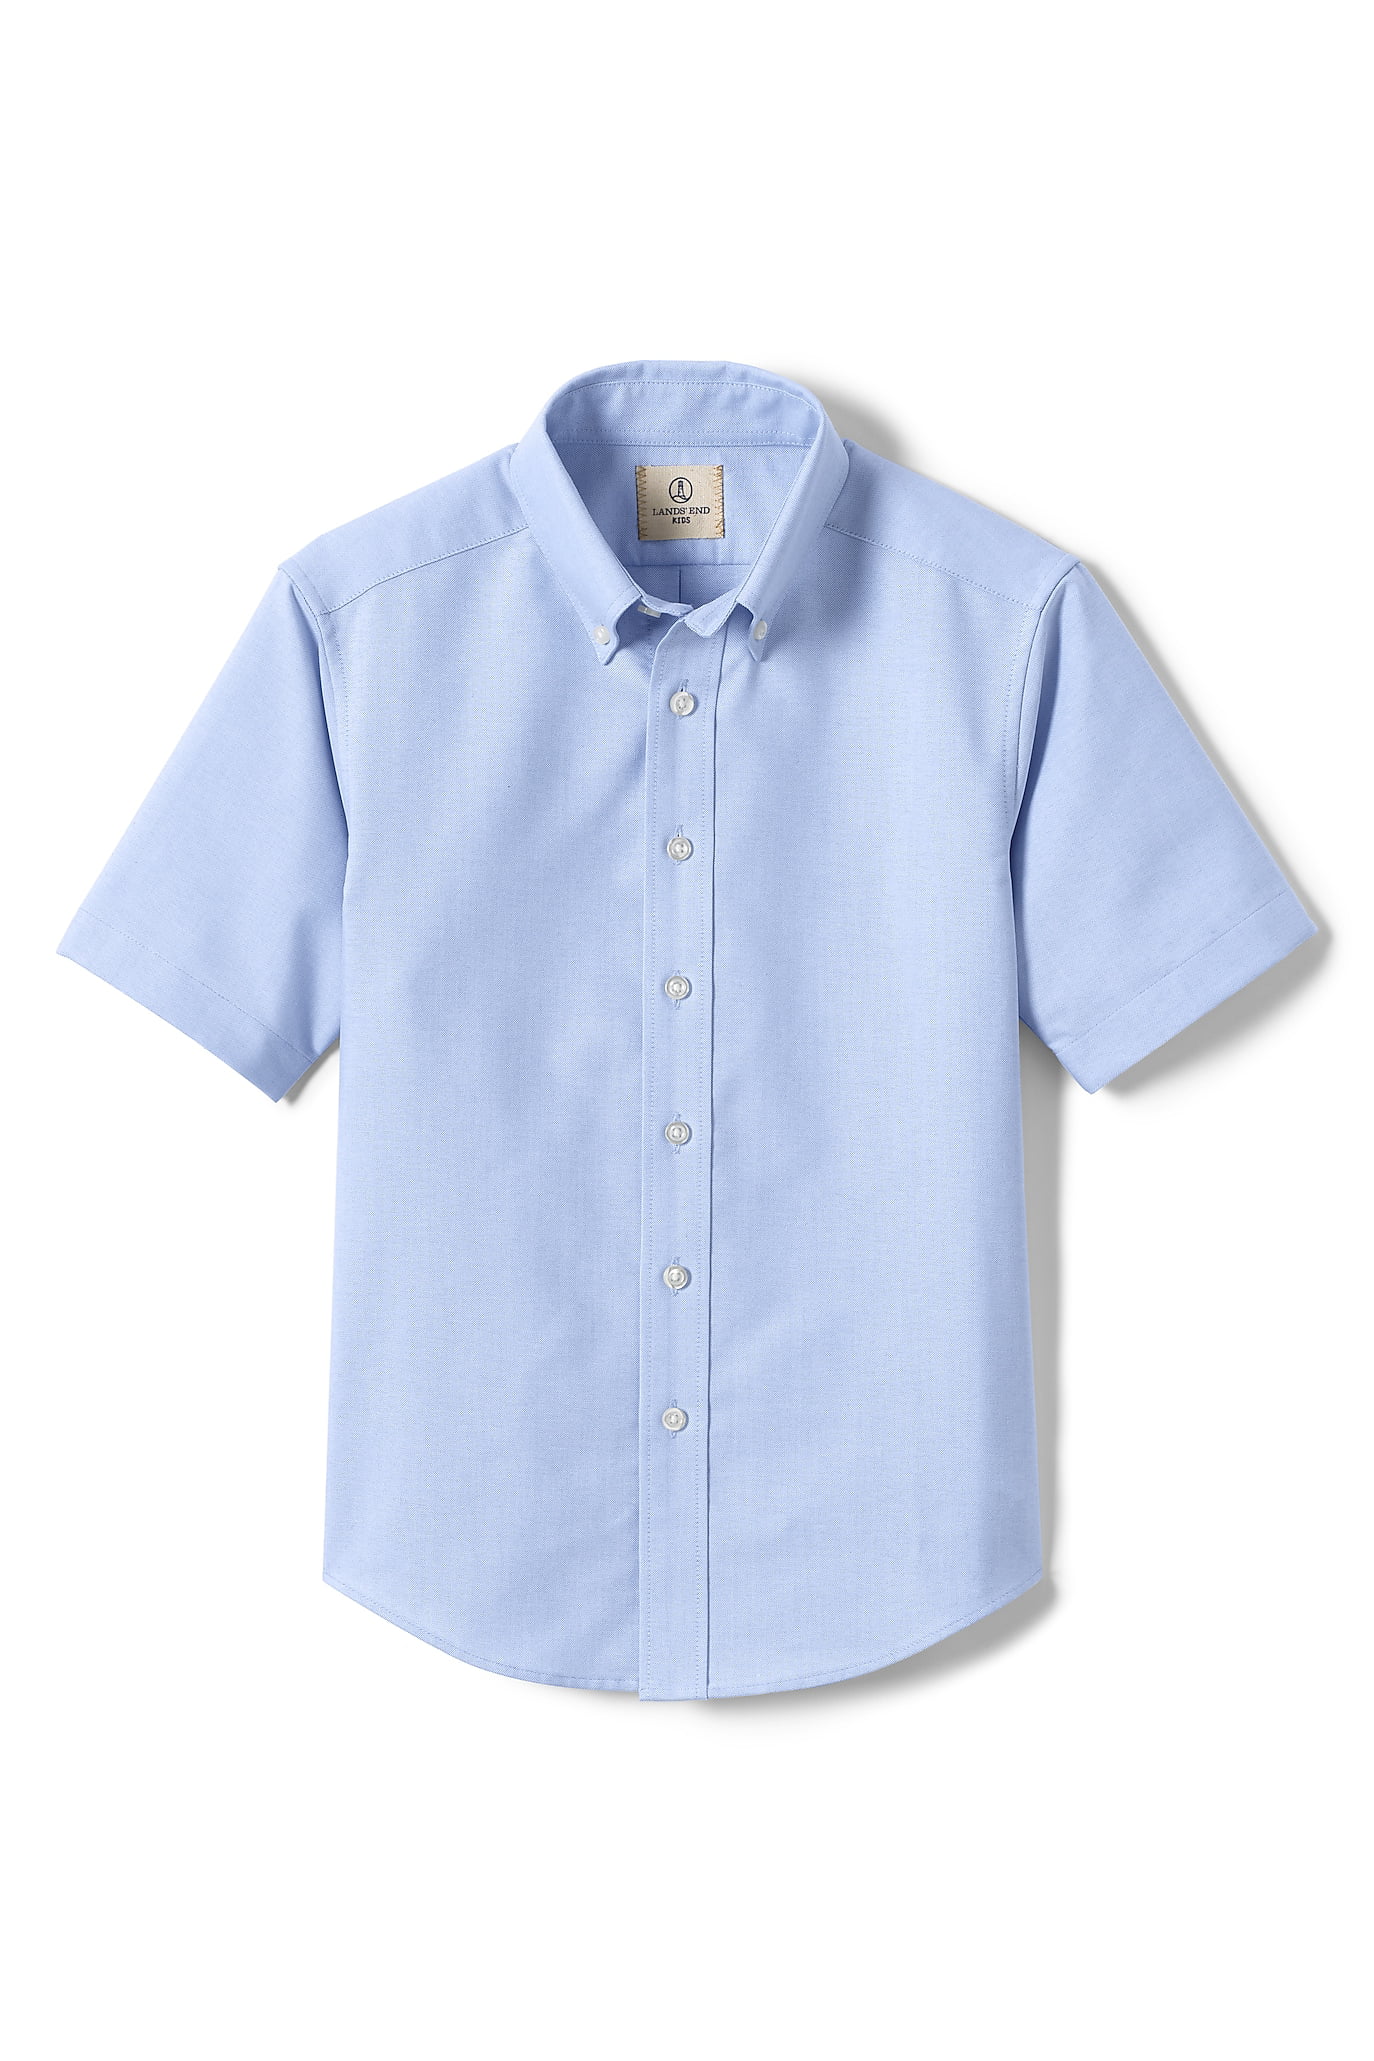 Essentials Boys Short-Sleeve Uniform Oxford